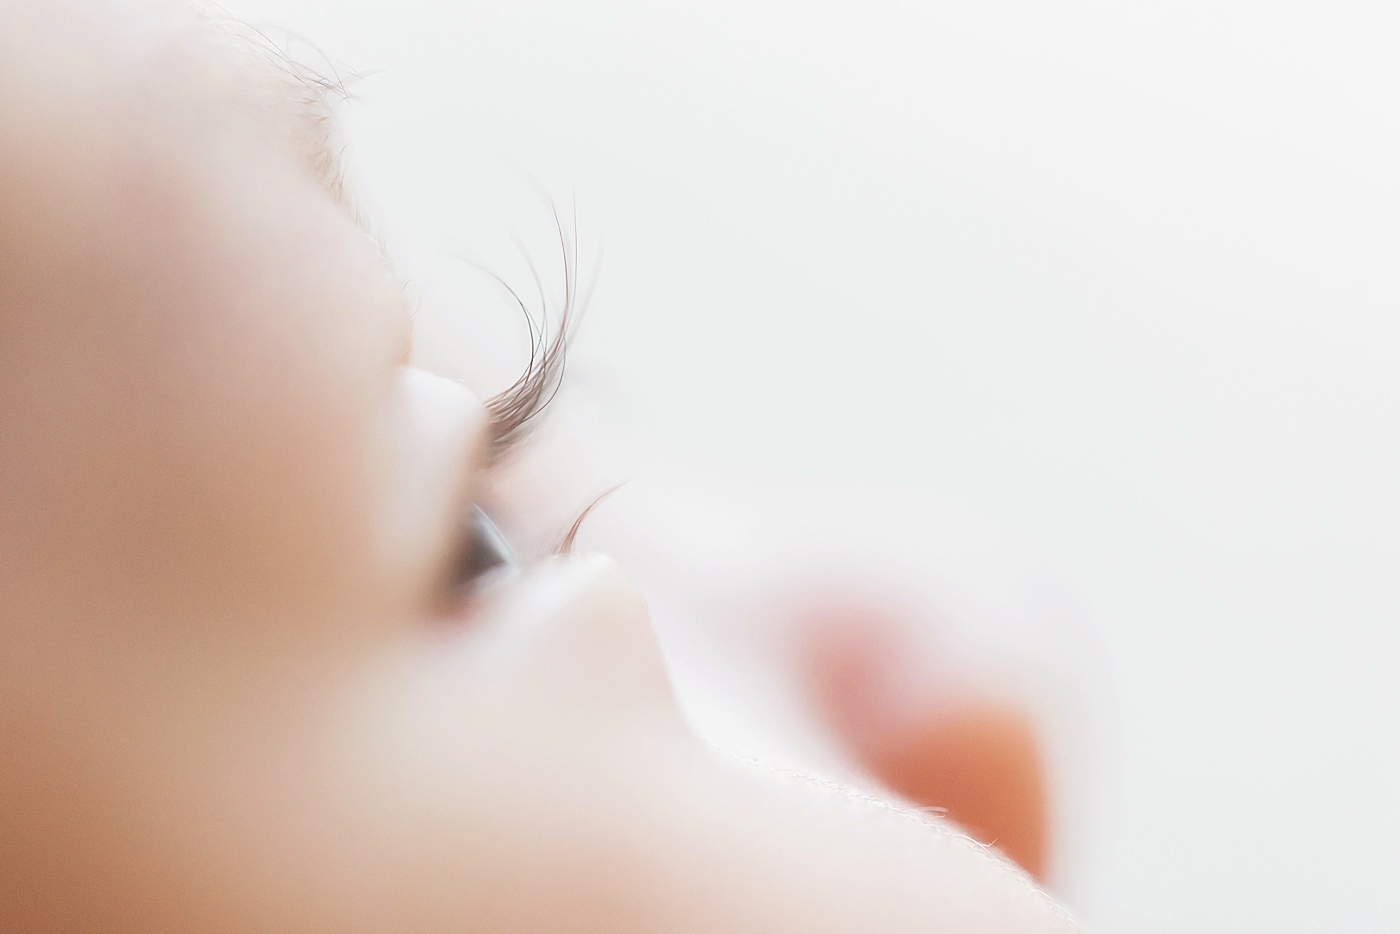 Detail photo of newborn baby's eyelashes. Photo by Fresh Light Photography.